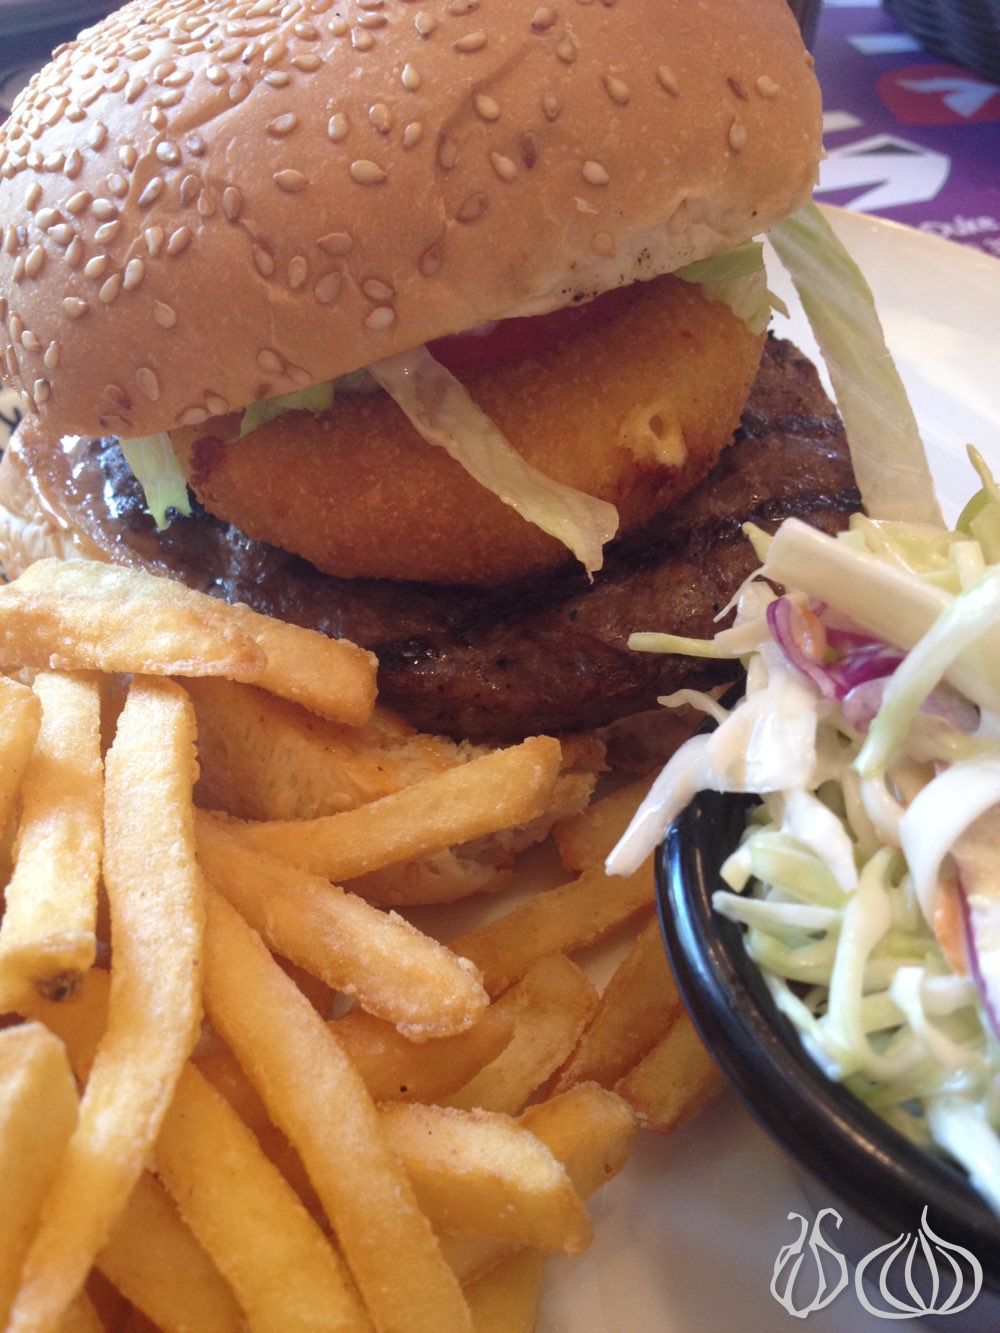 best-burgers-lebanon-nogarlicnoonions92014-10-26-09-41-59